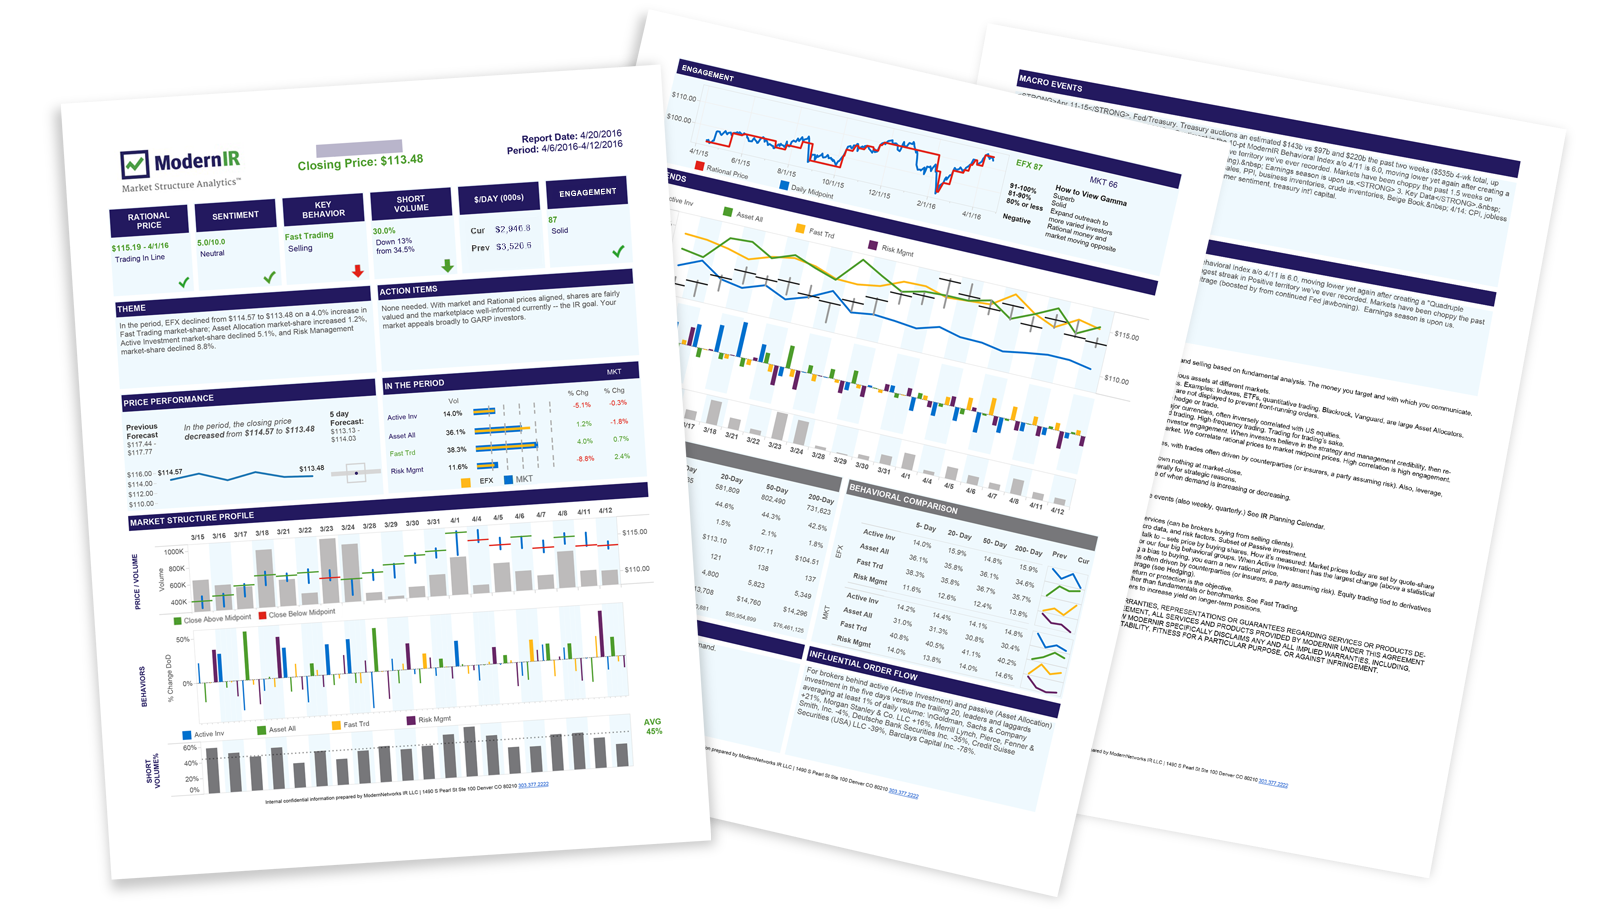 Market Structure Report